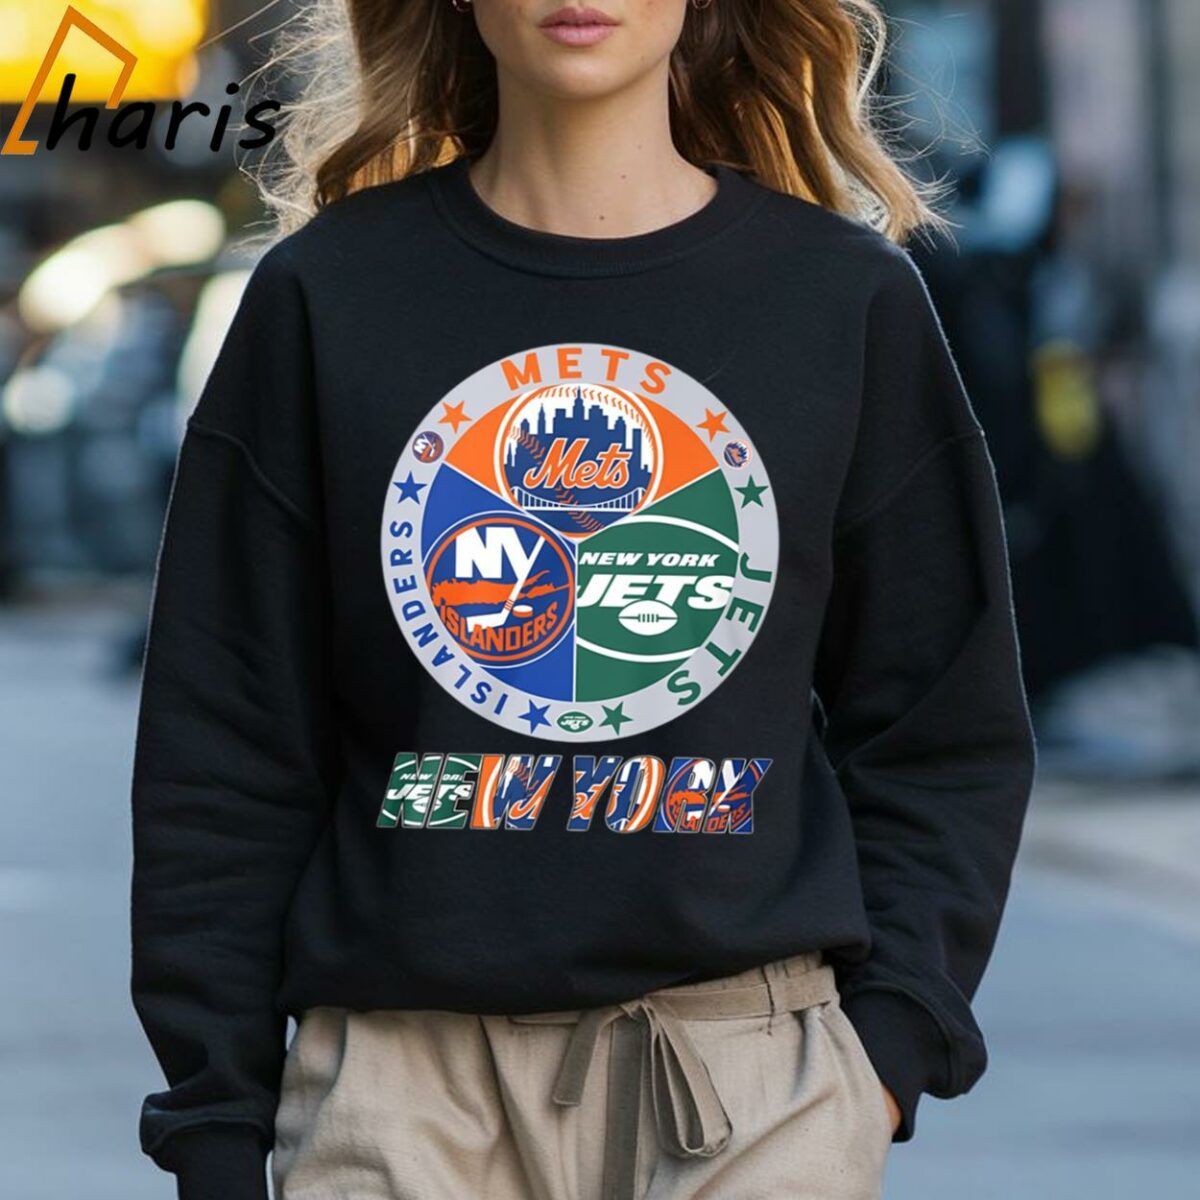 New York Mets Jets Islanders T shirt 3 Sweatshirt